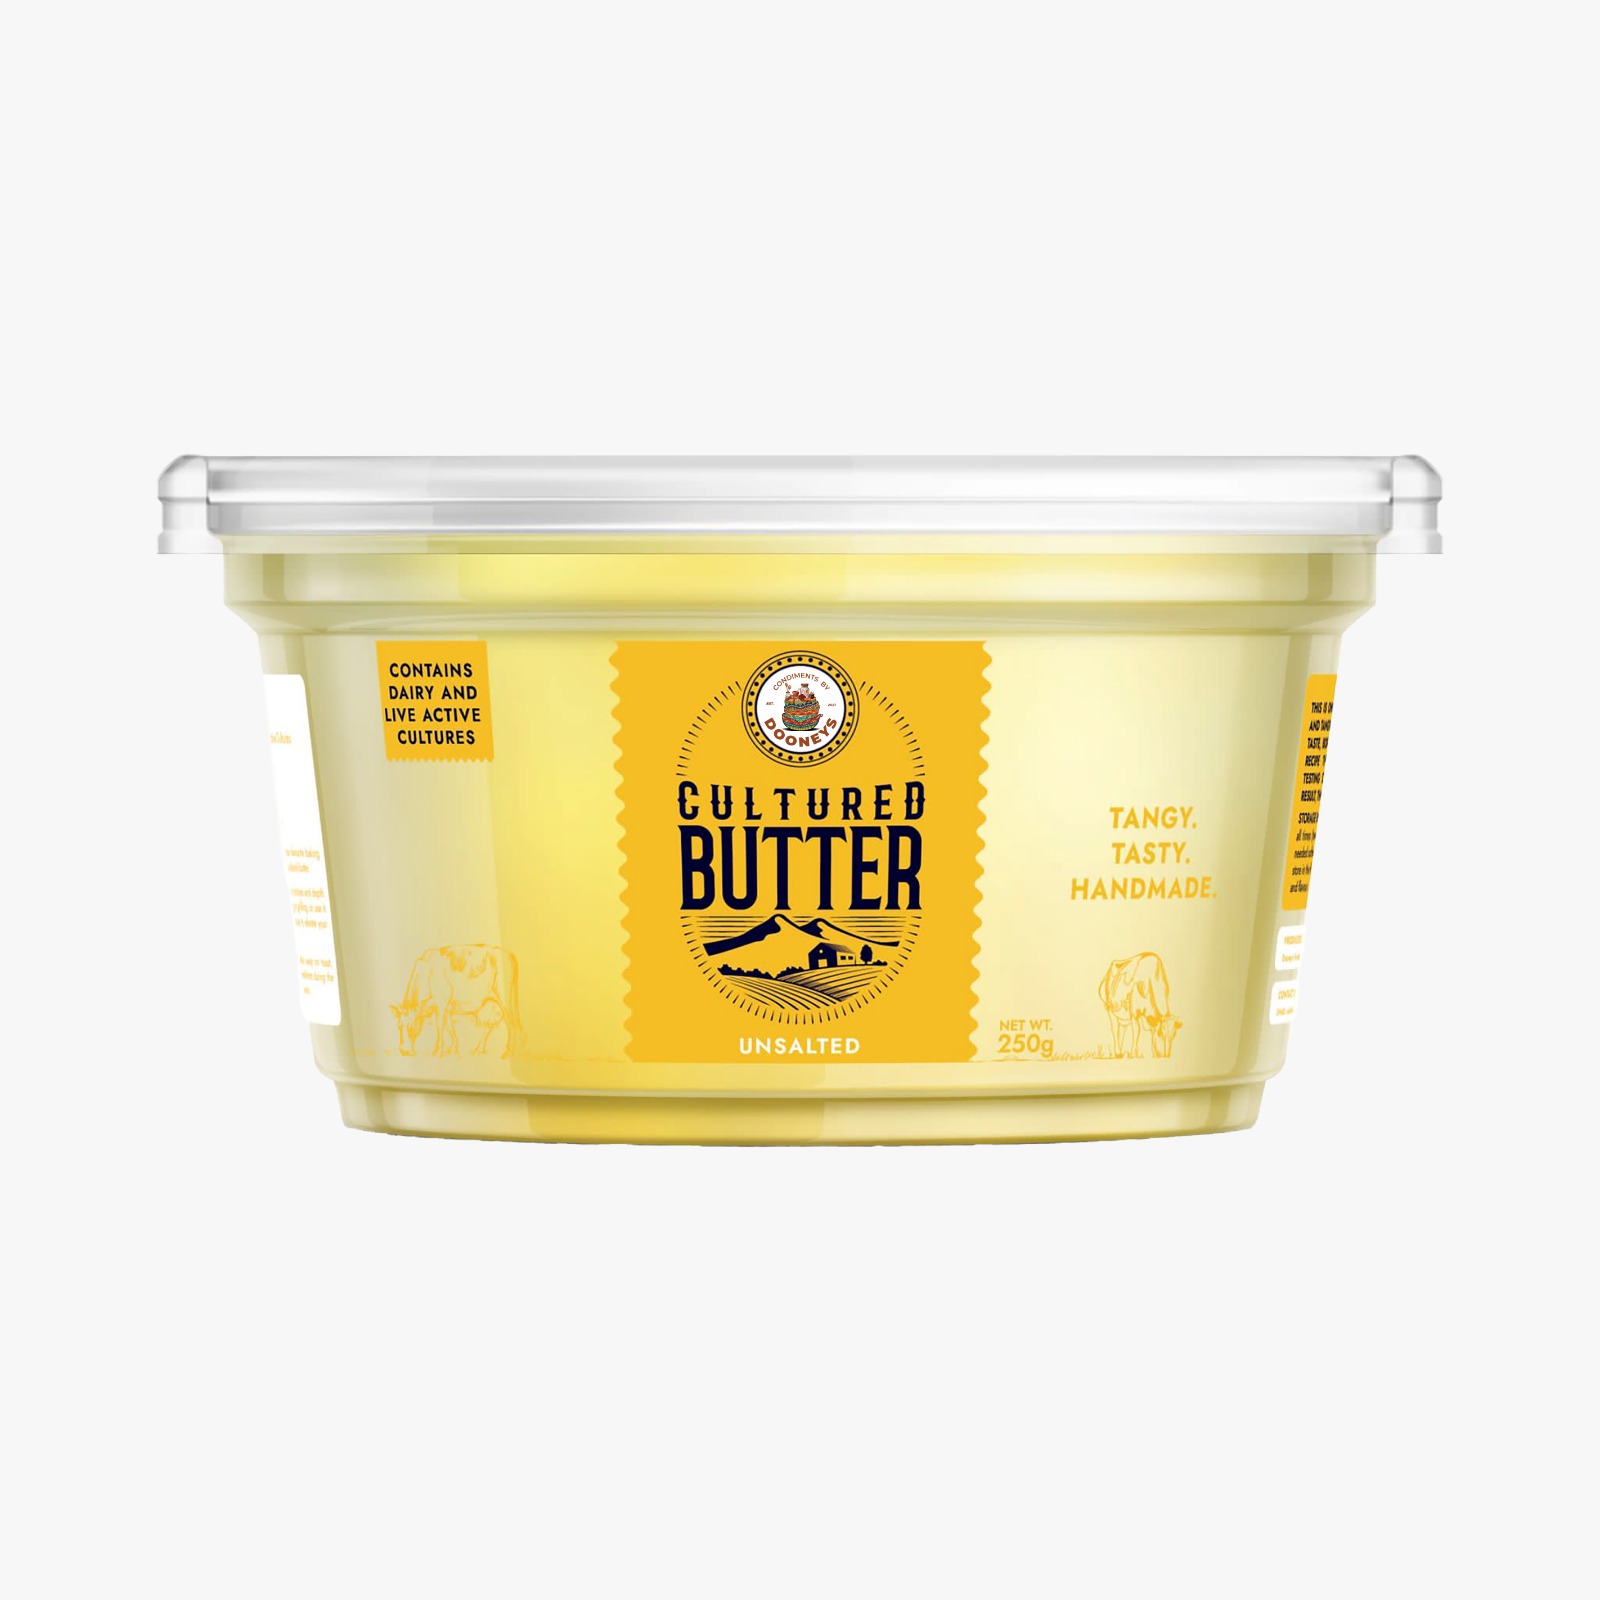 unsalted-butter